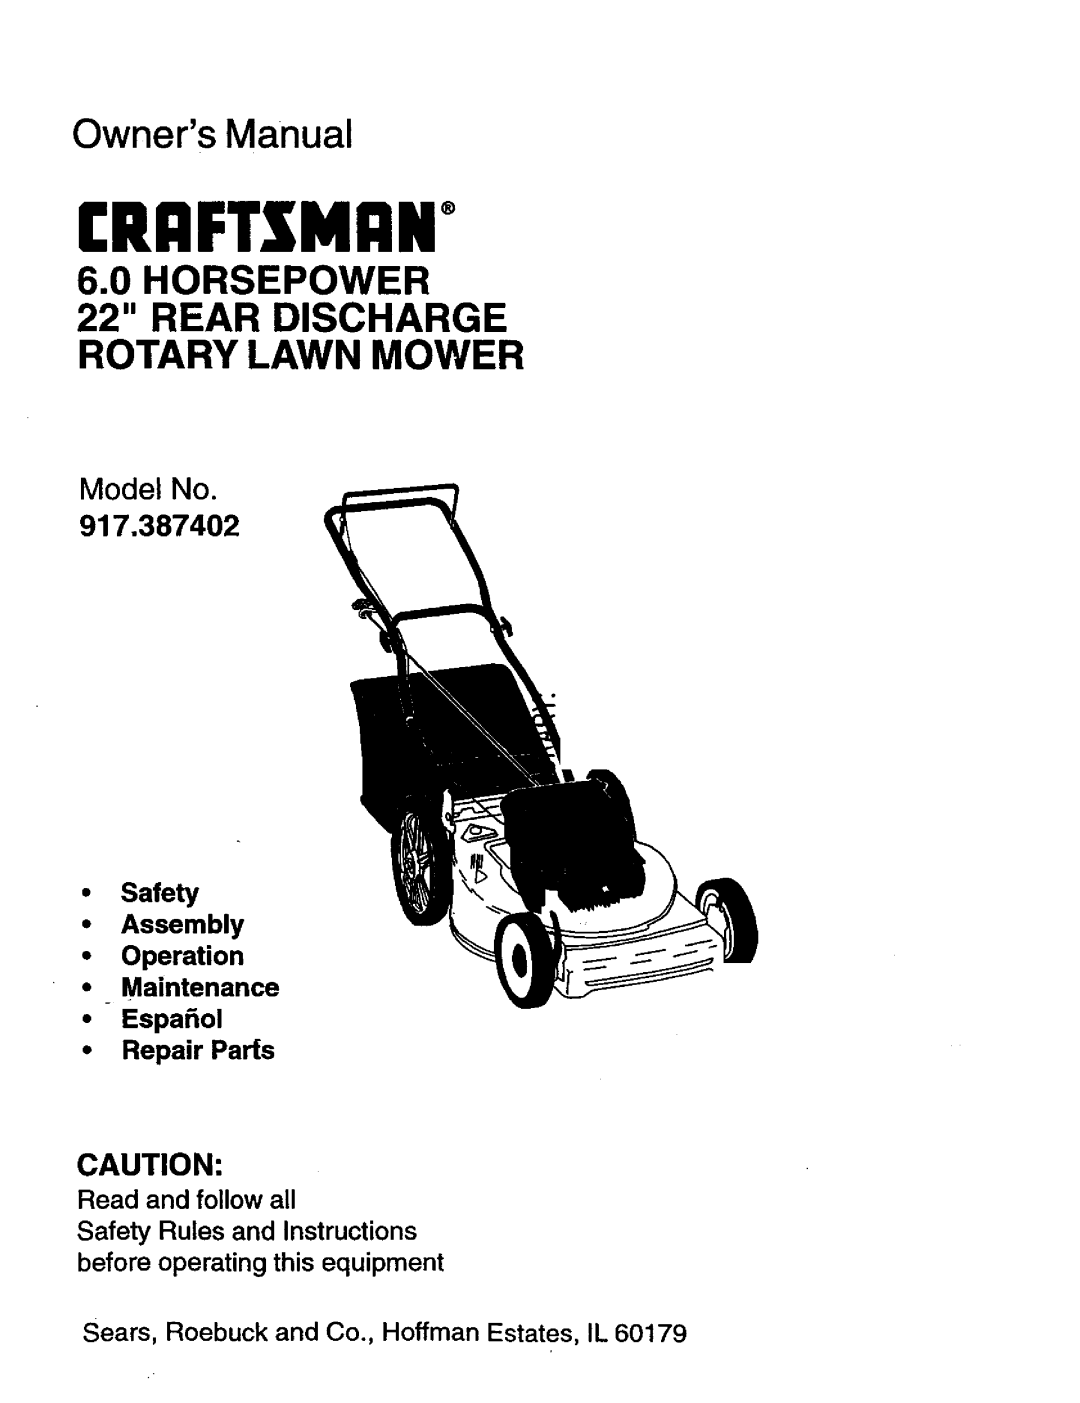 Craftsman 917.387402 owner manual Seam, Roebuck and Co., Hoffman Estates, IL, Rrftxmi In, Horsepower, Model No 